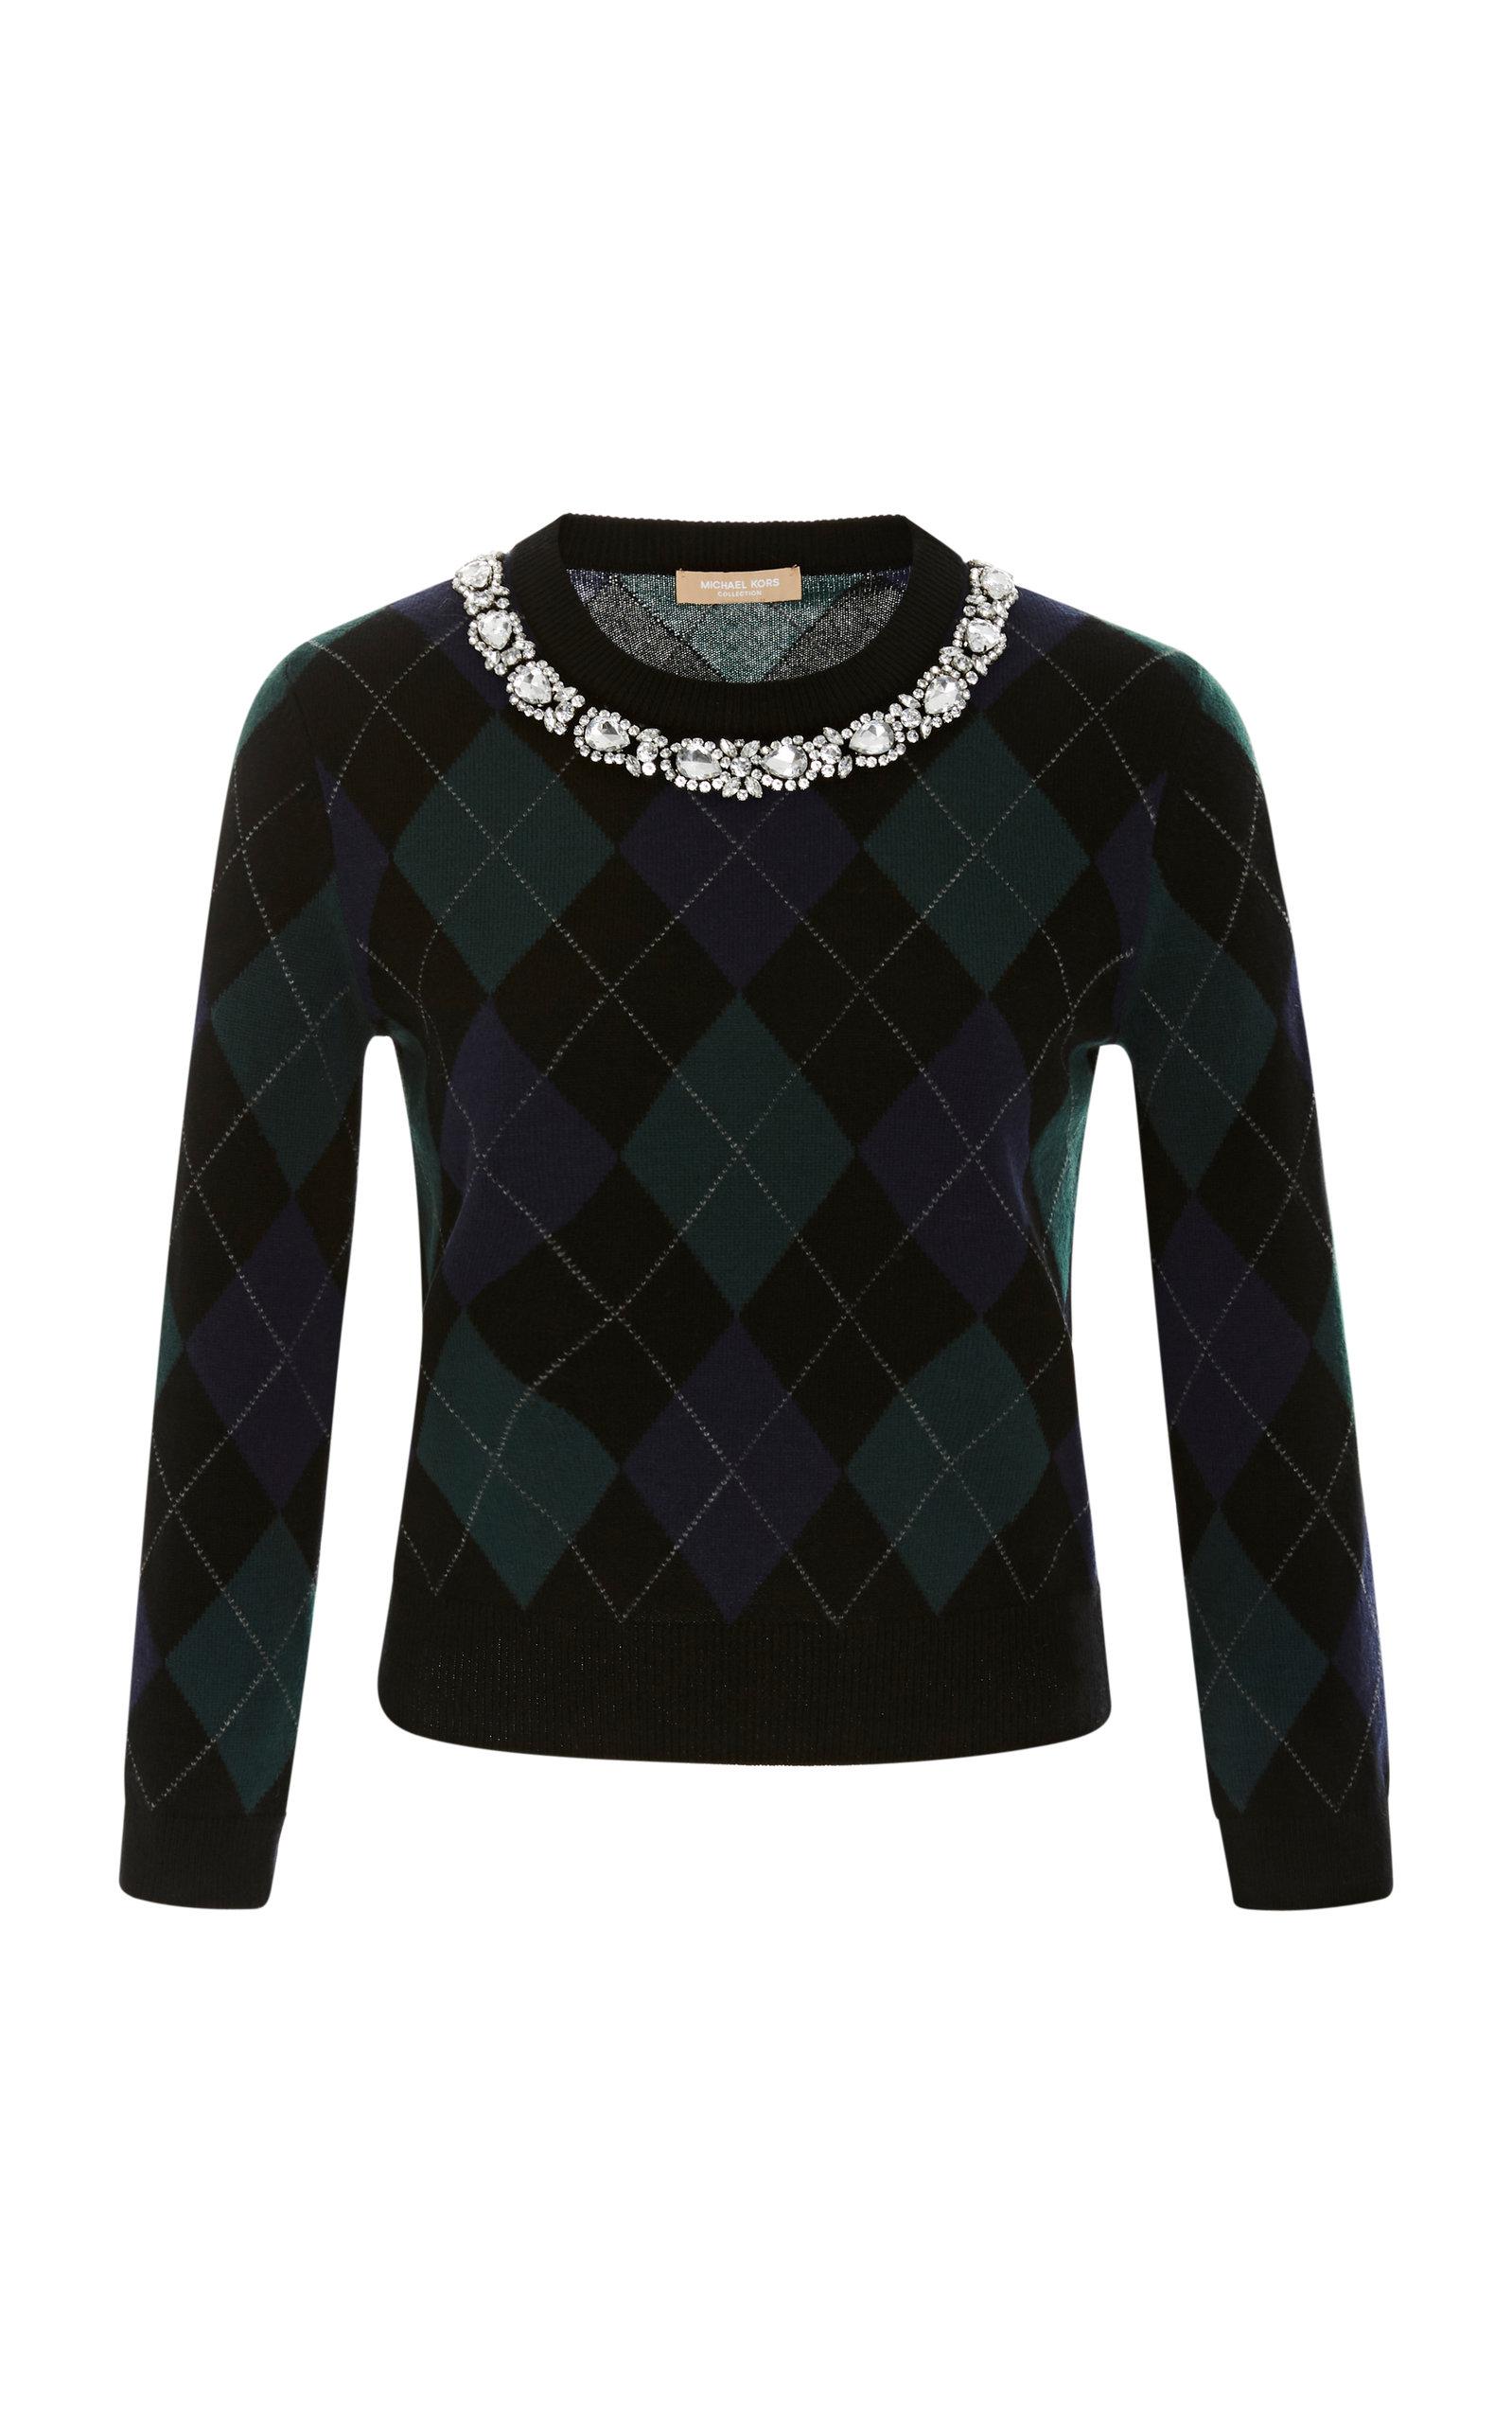 Michael Kors Argyle Sweater Flash Sales, 57% OFF | www.lasdeliciasvejer.com